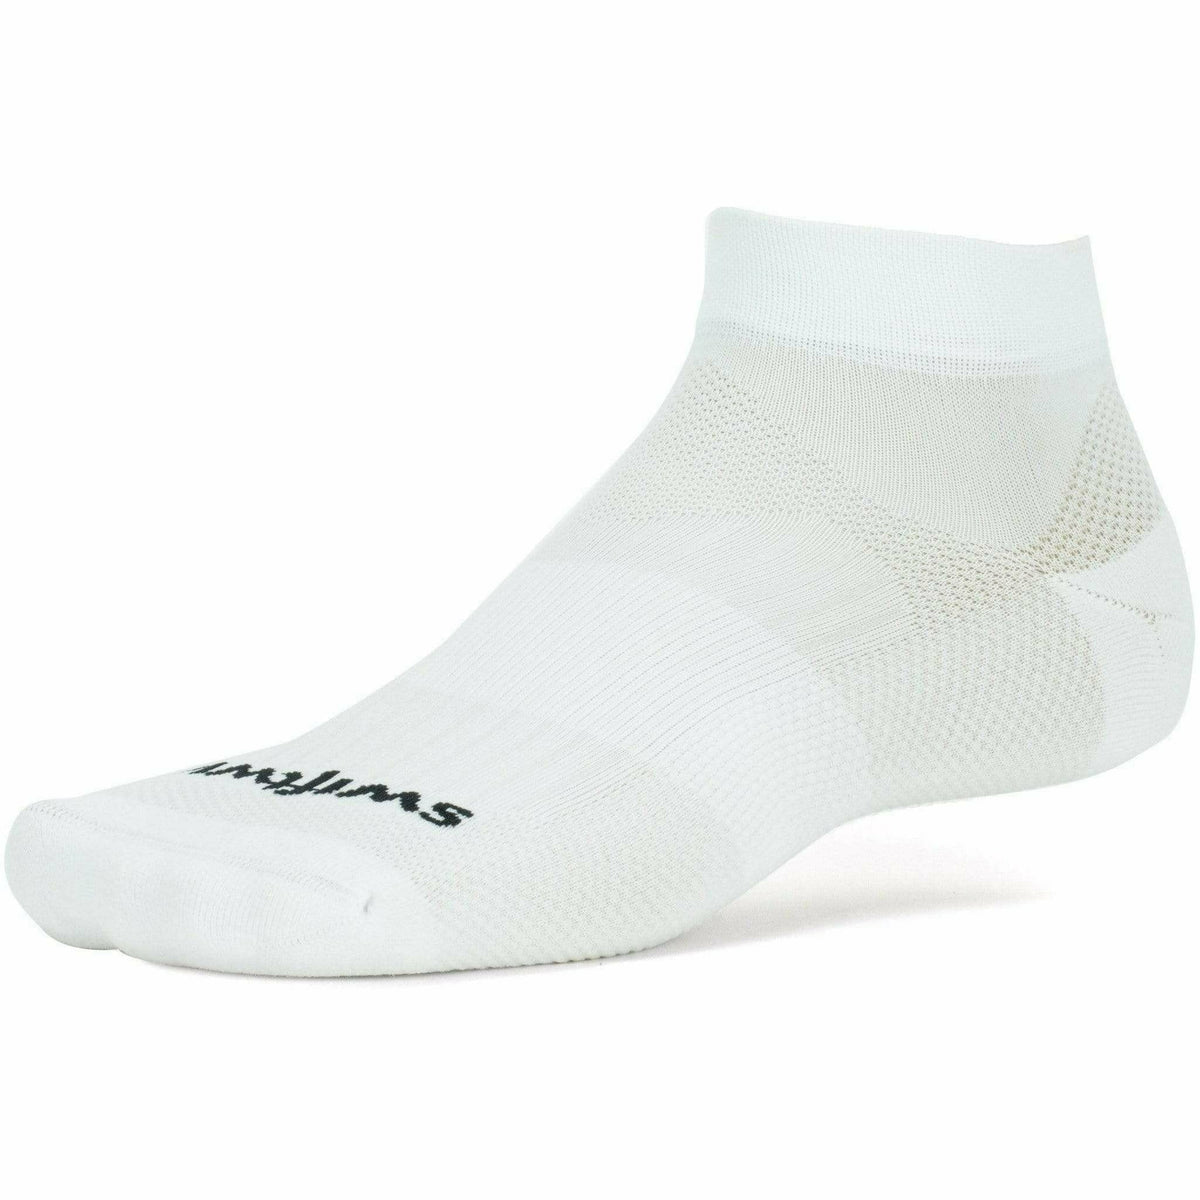 Swiftwick Aspire One Ankle Socks | GoBros.com